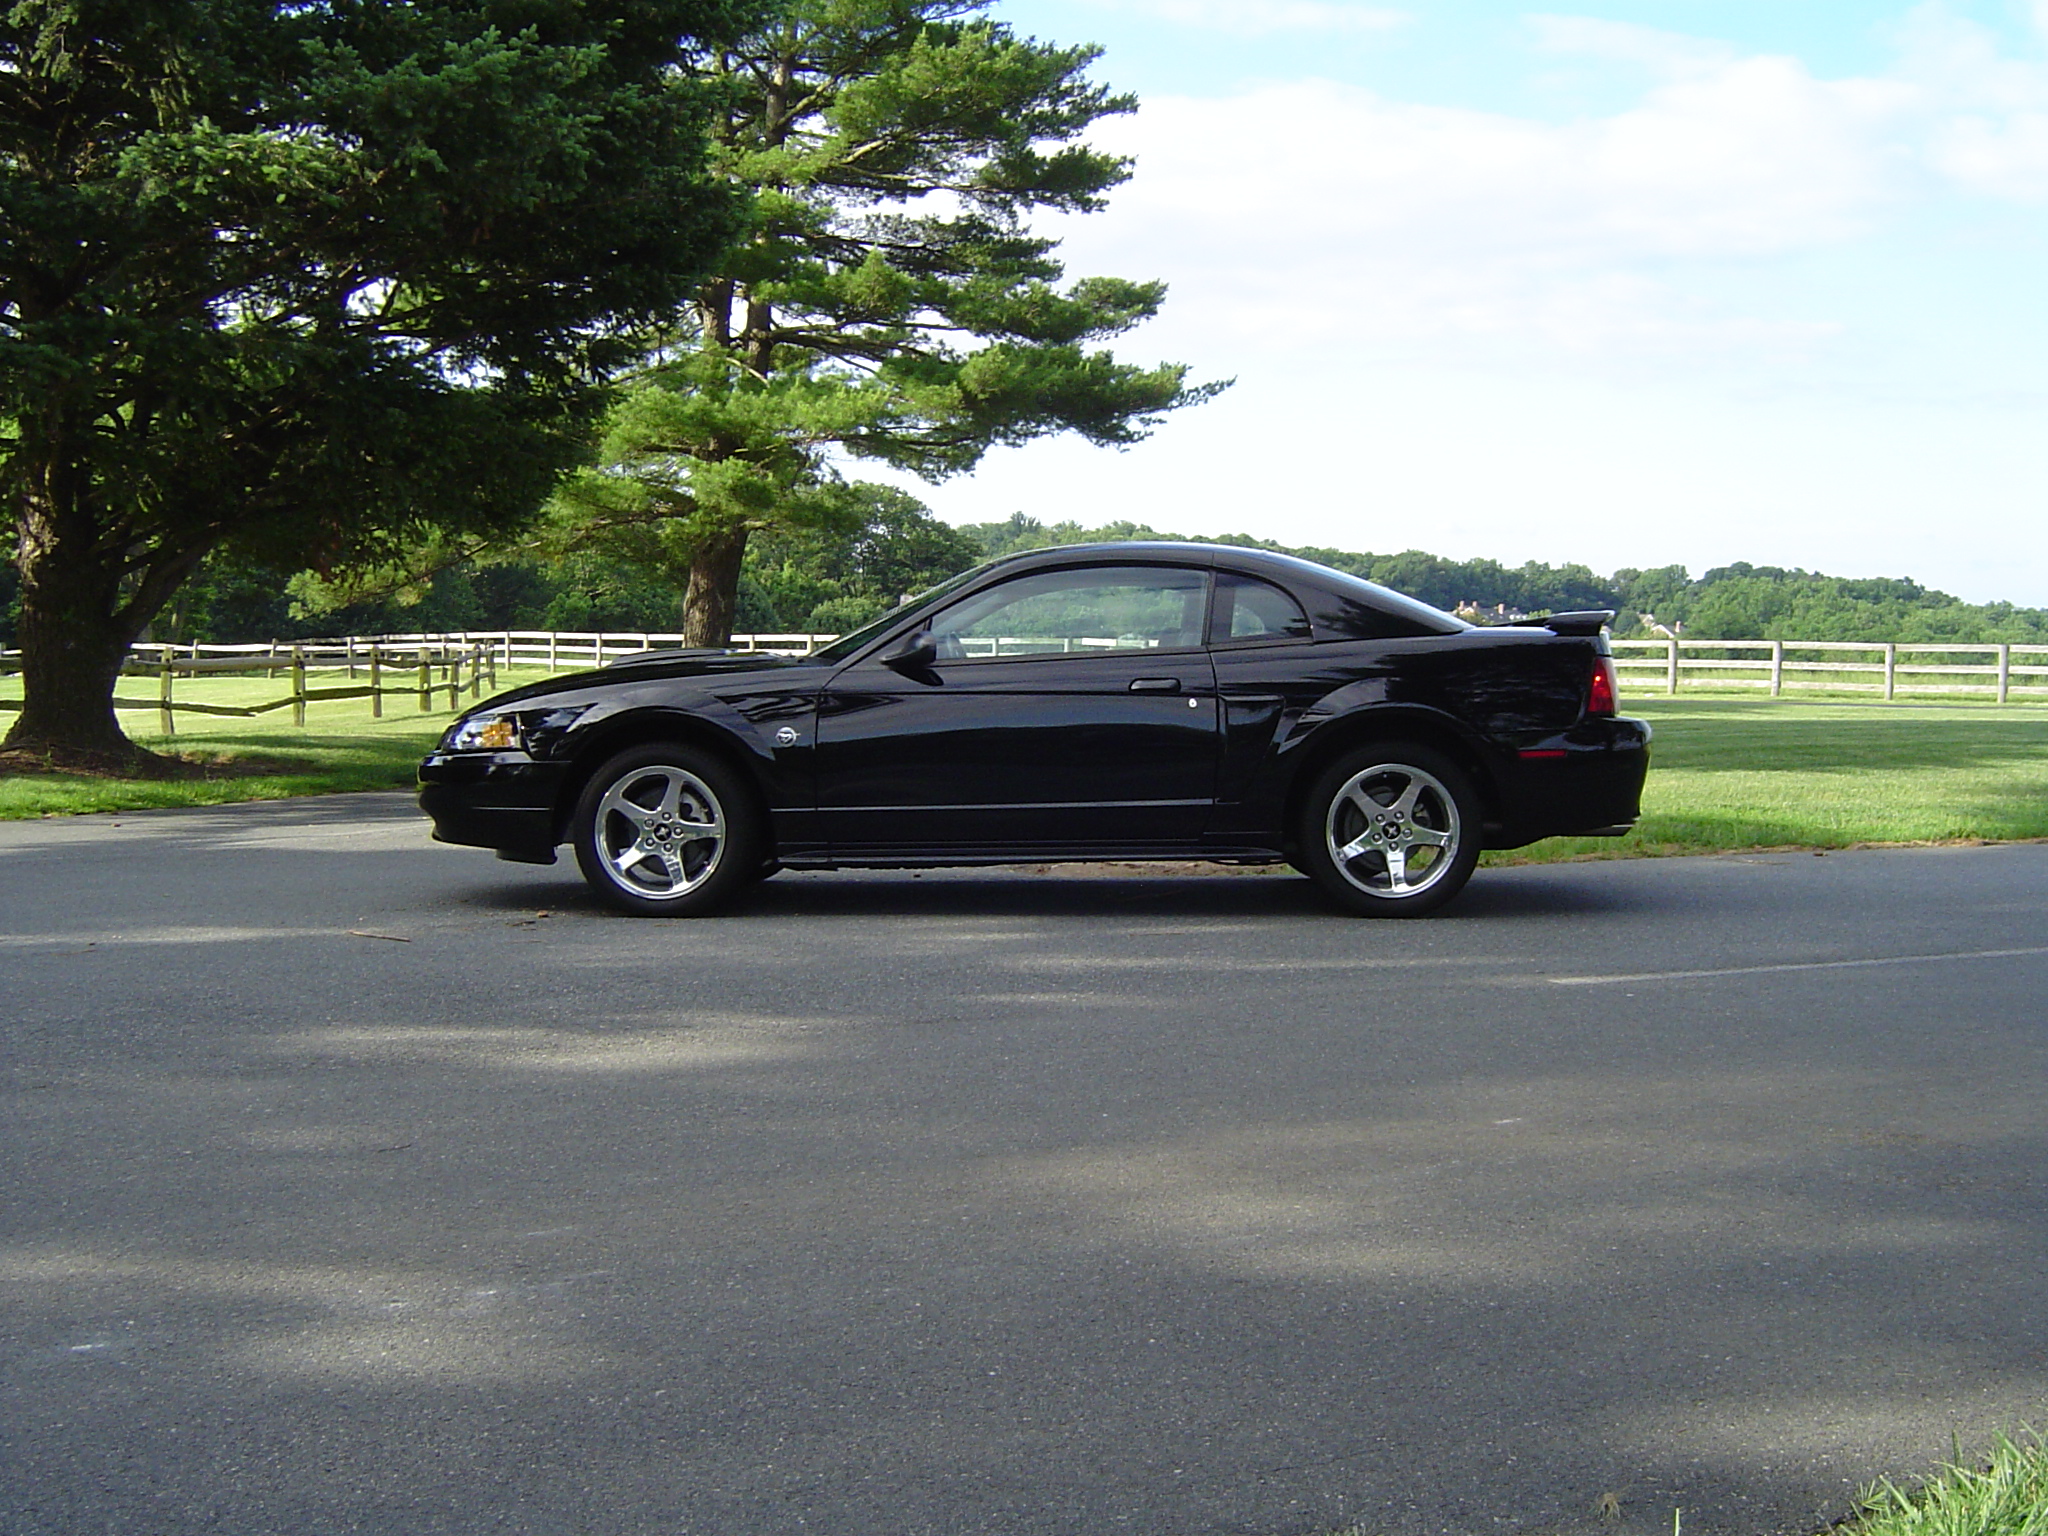 2004 Ford Mustang GT Black 013.jpg